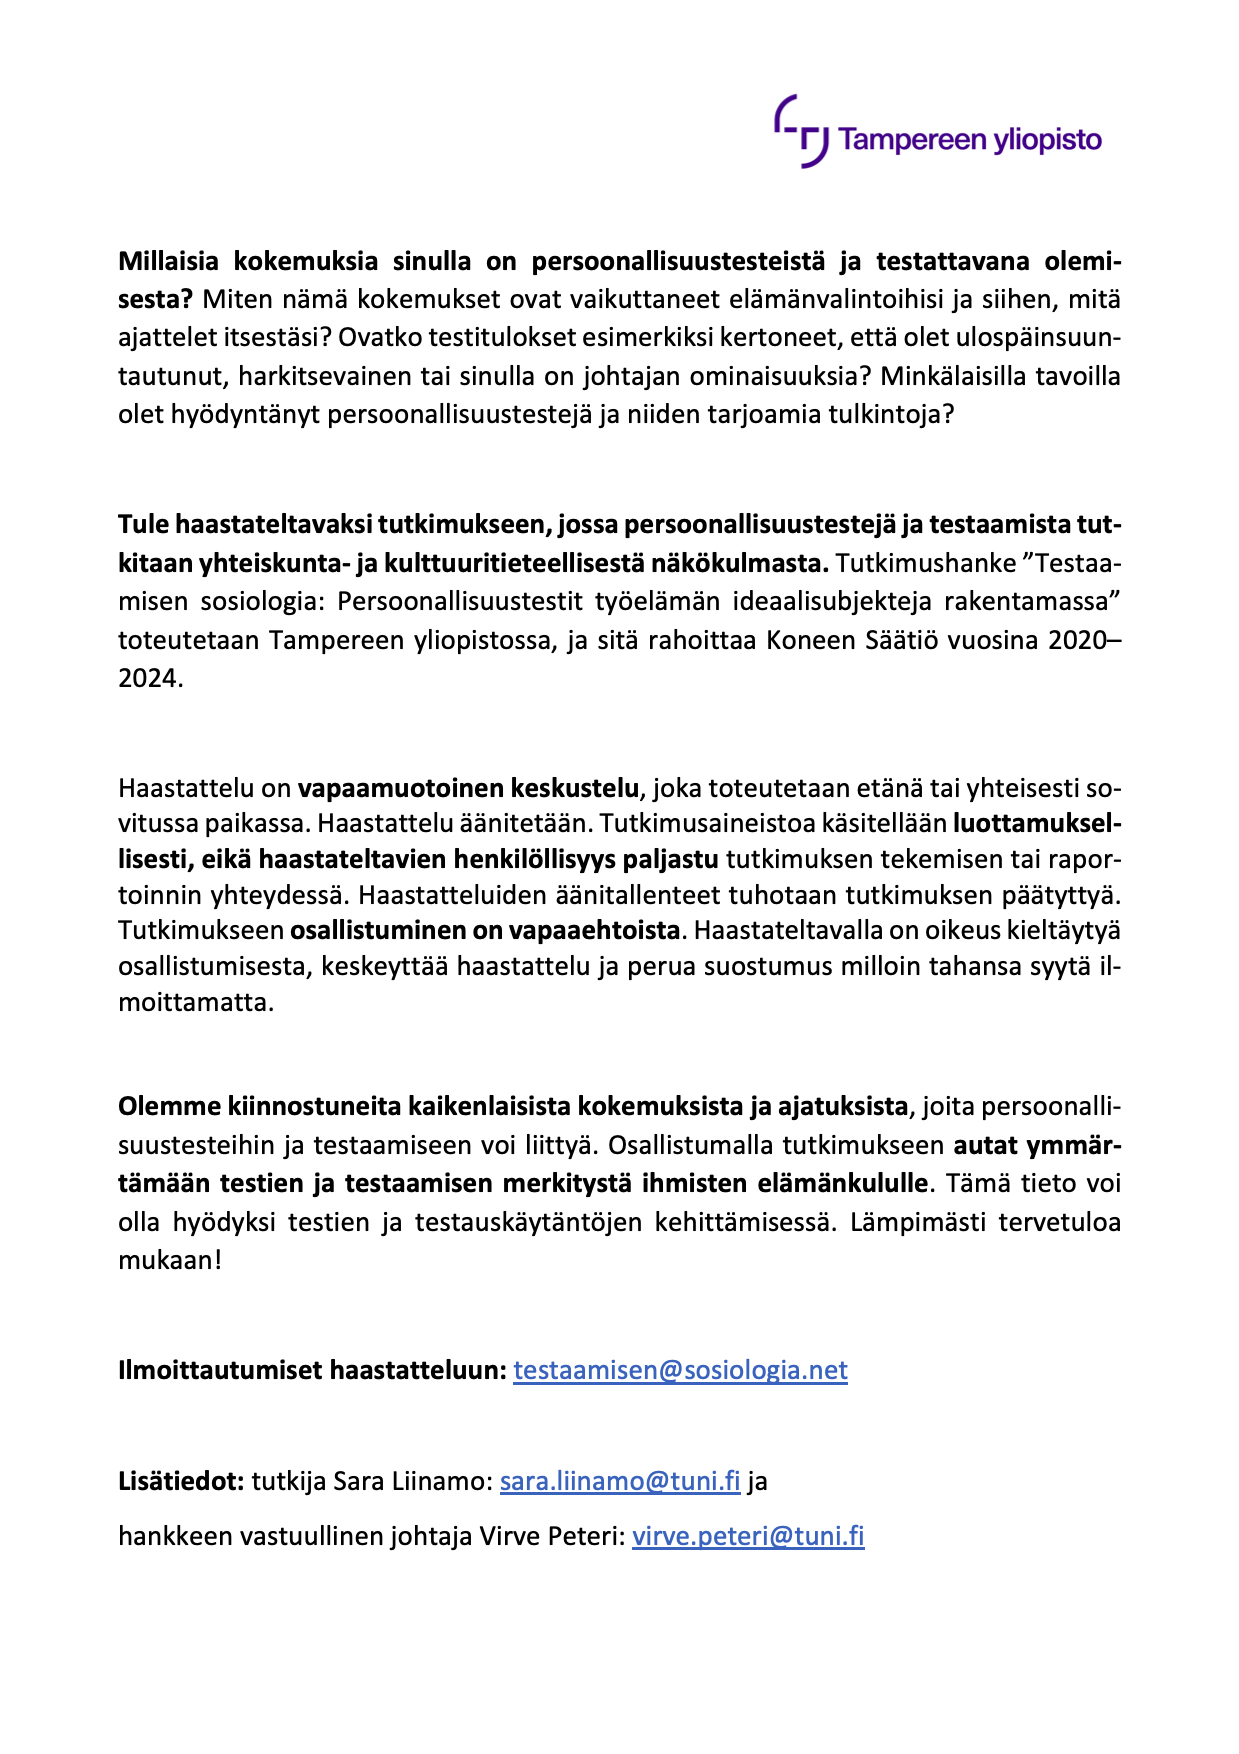 Tutkimuskutsu2_jpg_Tampereen yliopisto.jpg